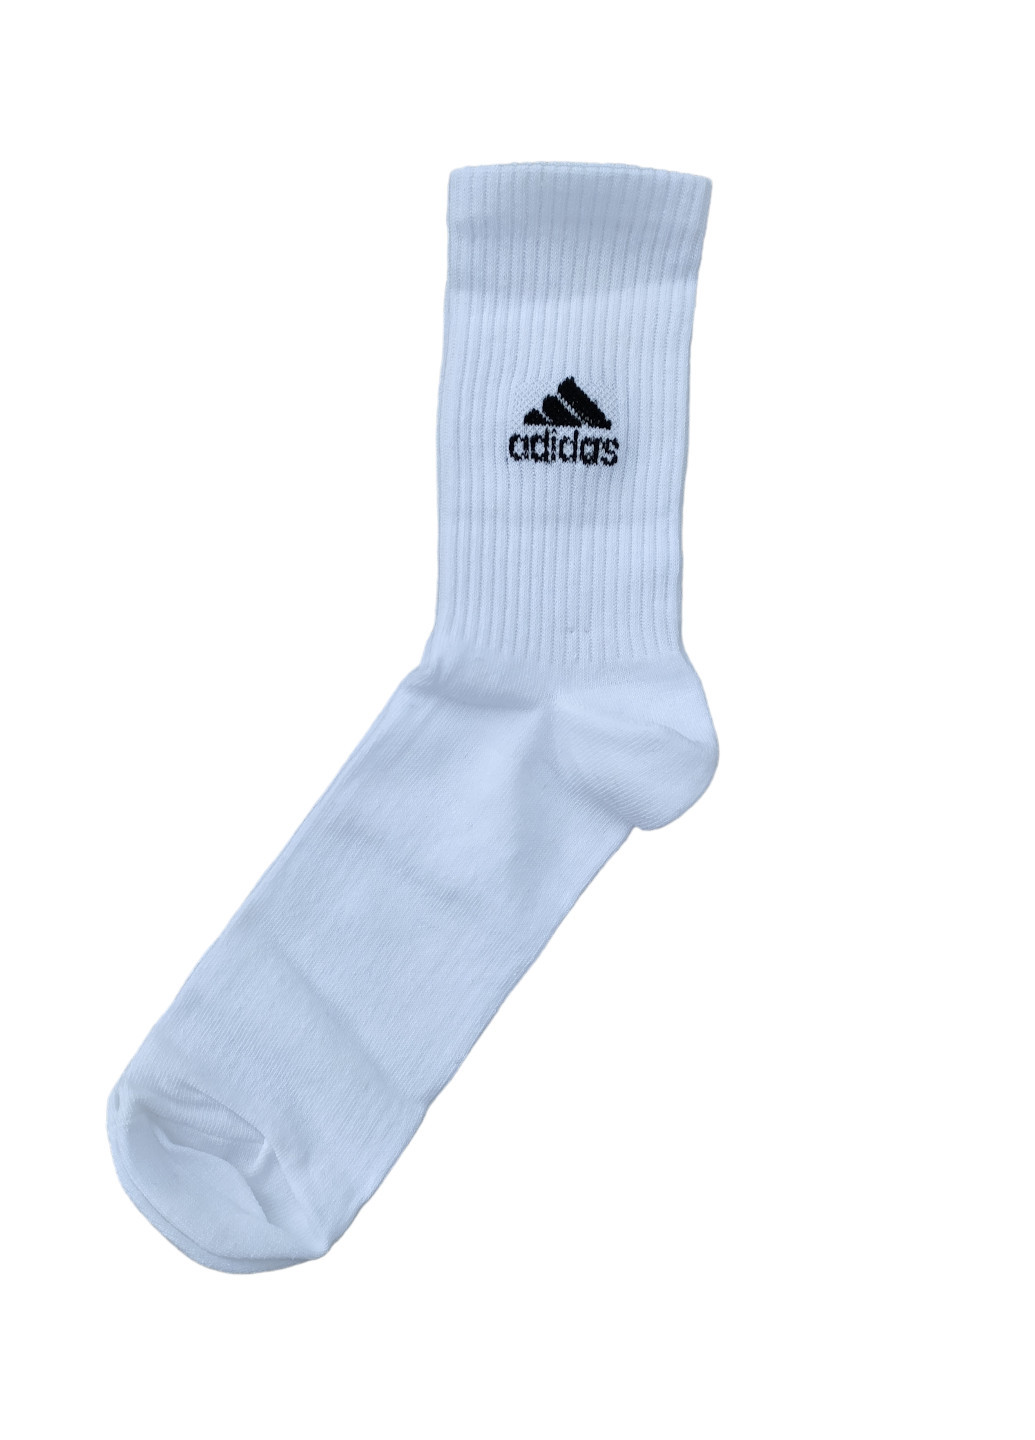 Високі шкарпетки Adidas 40-44 No Brand (258186303)